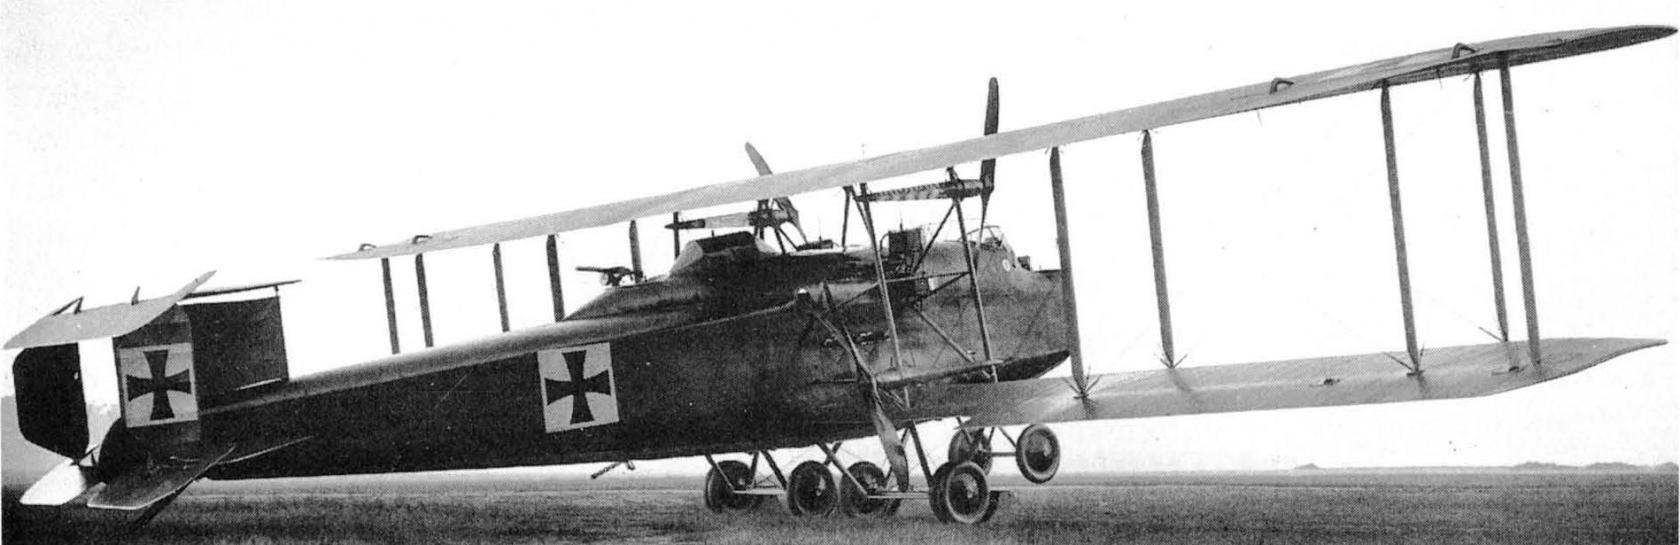 Тяжелые бомбардировщики Deutsche Flugzeugwerke. Тяжелый бомбардировщик DFW R.I. Германия